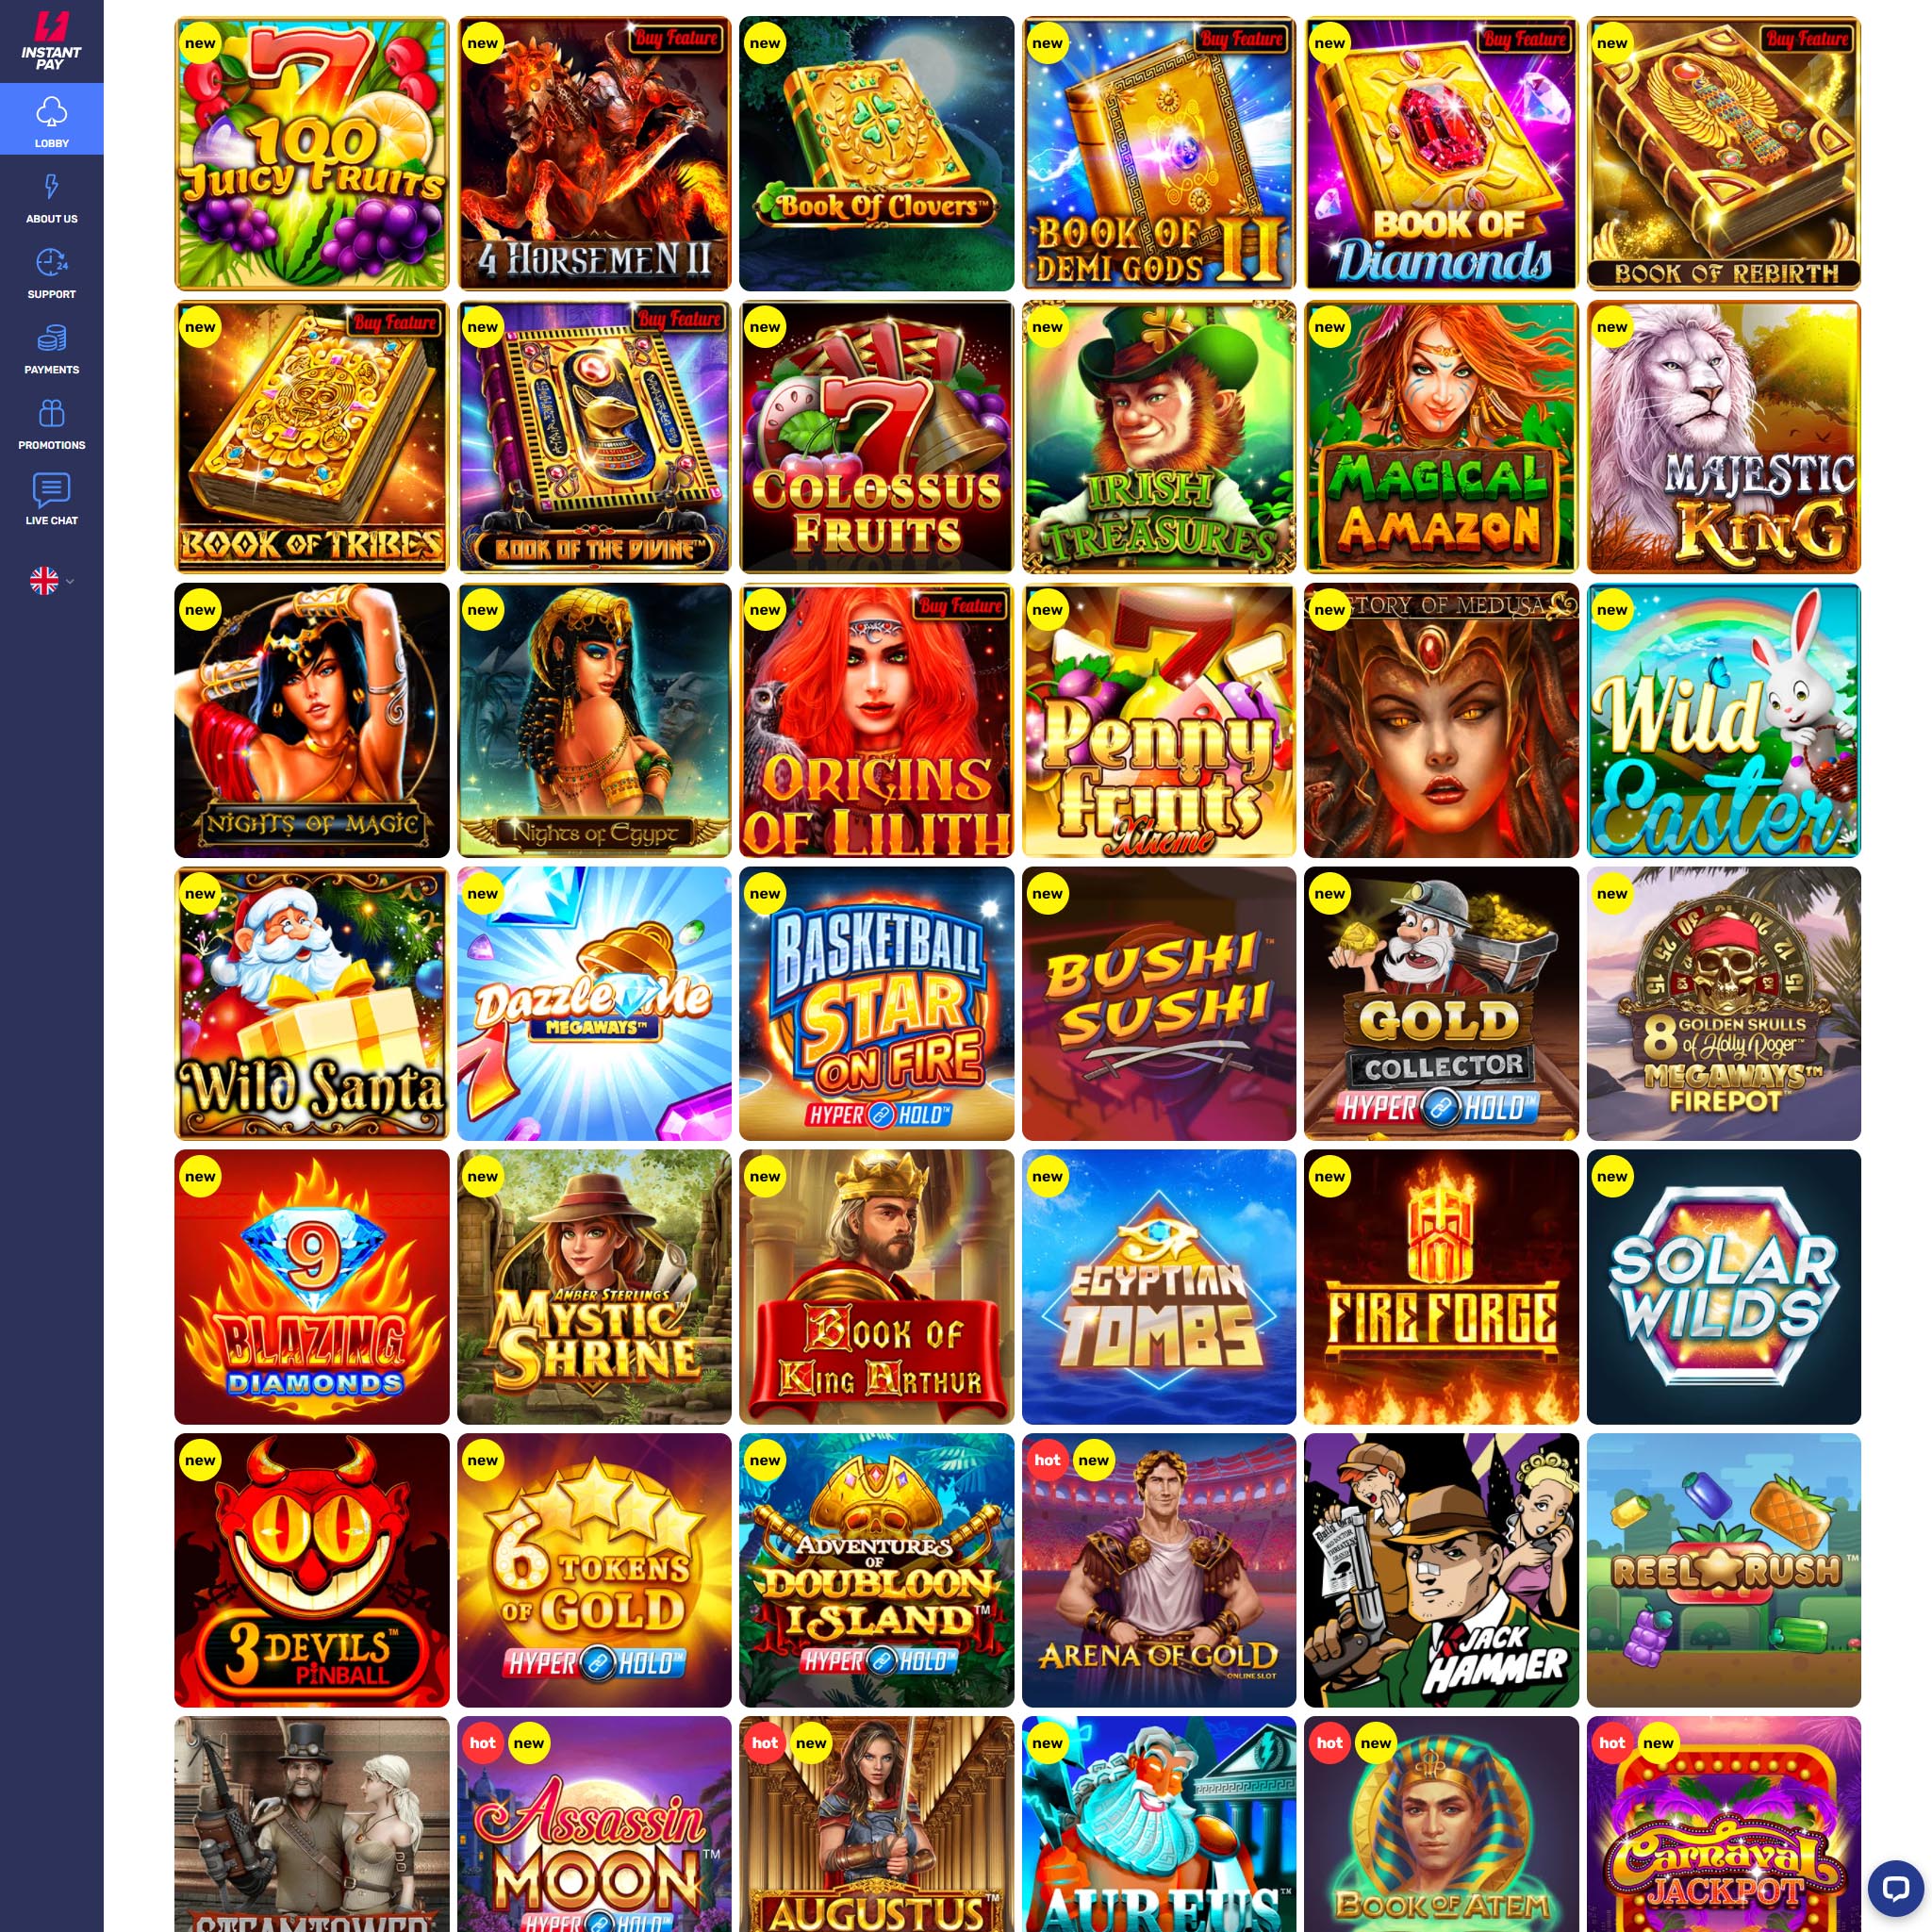 InstantPay Casino full games catalogue